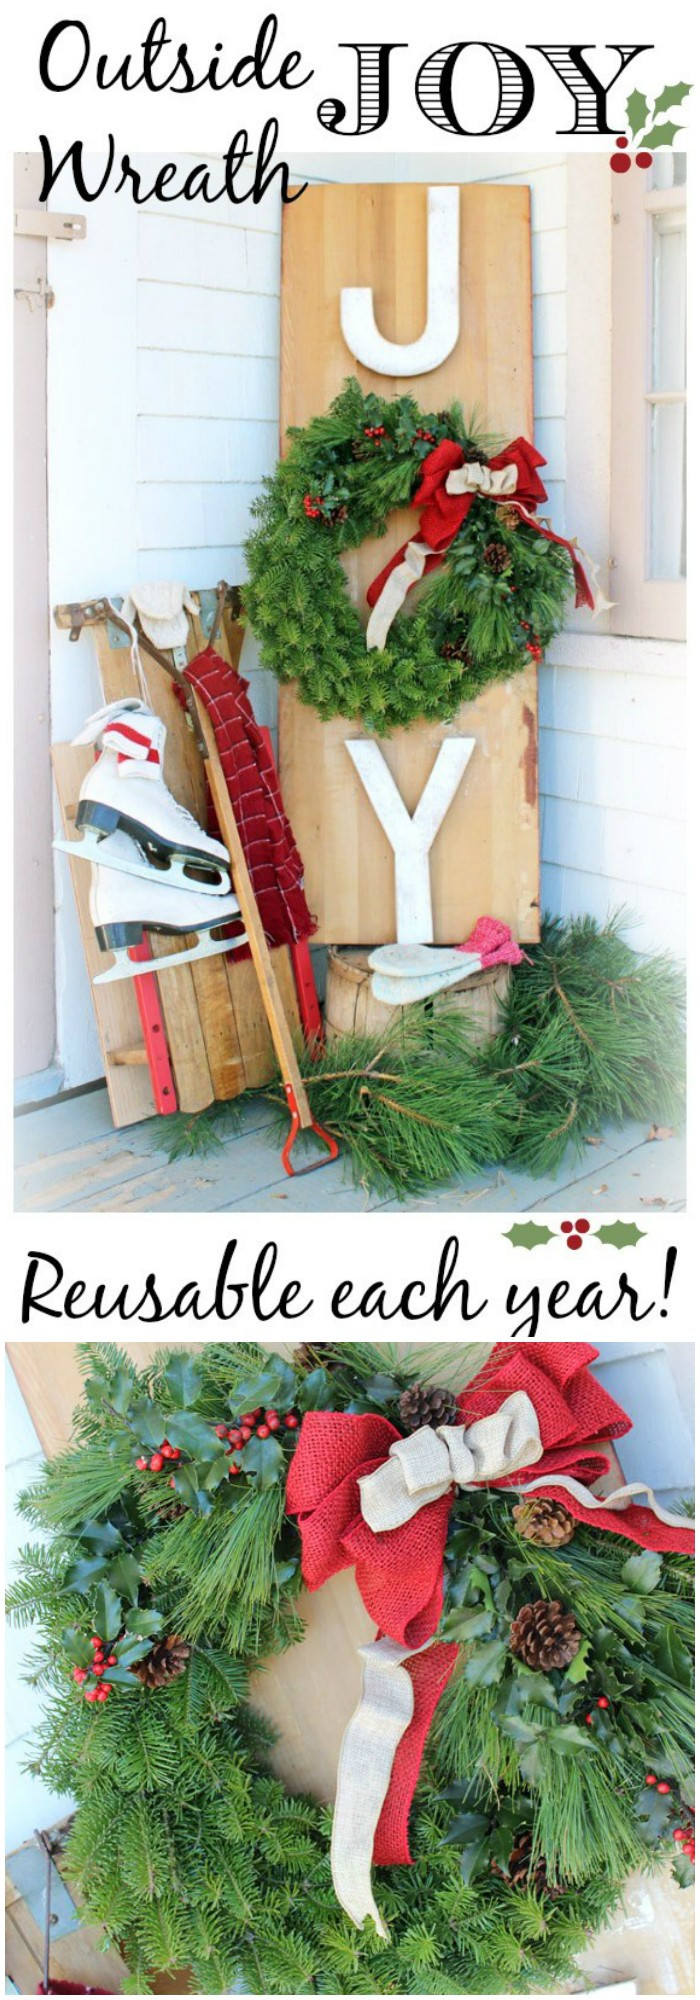 DIY Outside Christmas Decorations
 21 Cheap DIY Outdoor Christmas Decorations • DIY Home Decor